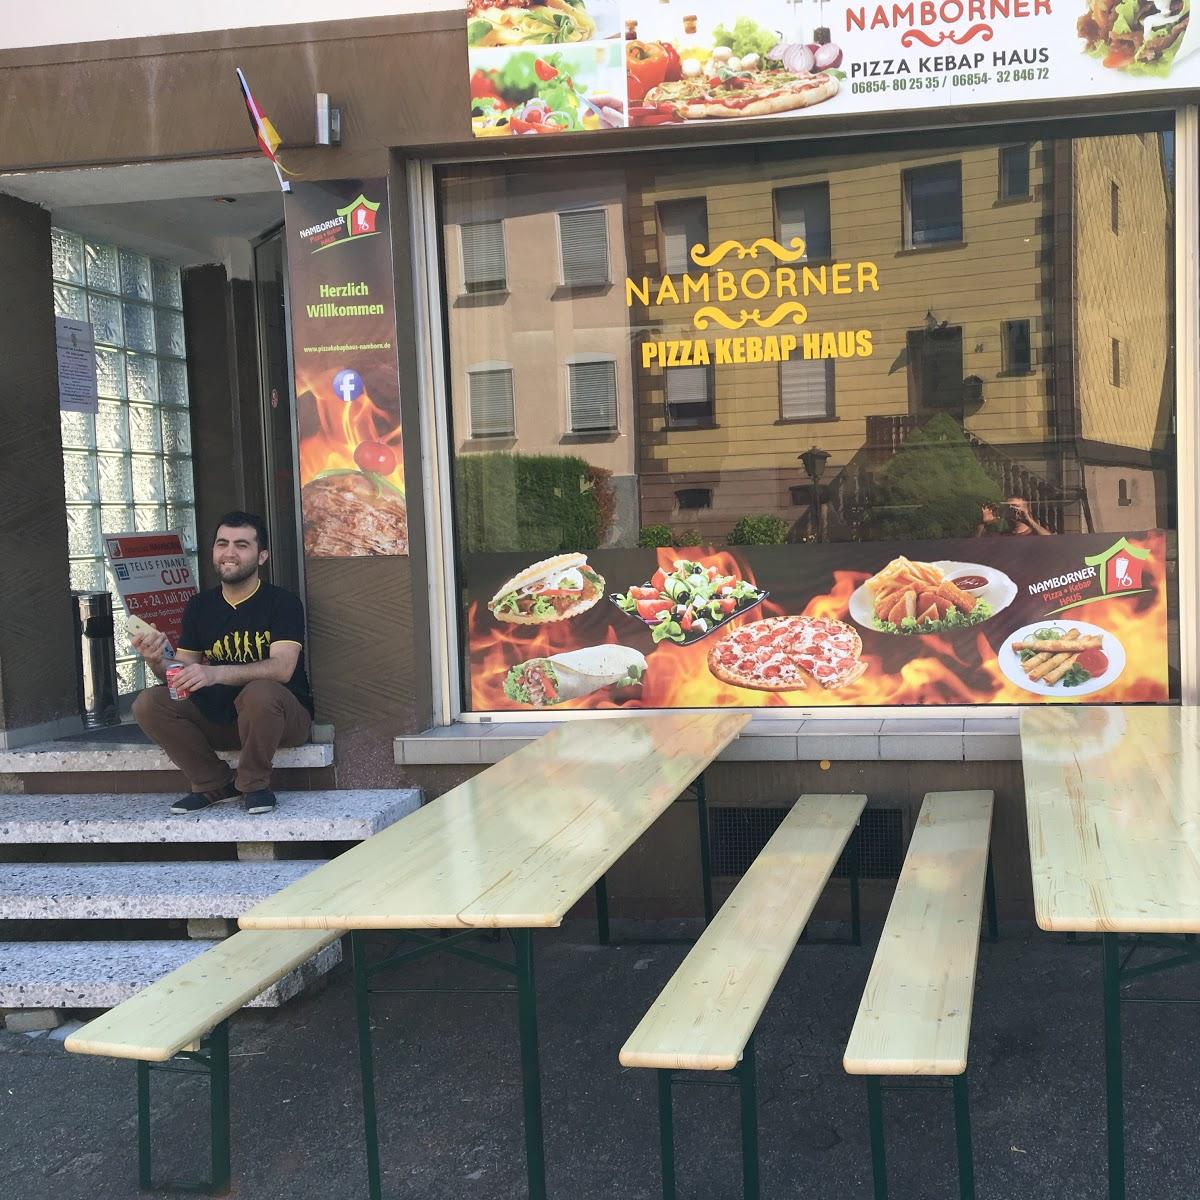 Restaurant "er Pizza Kebab Haus" in Namborn